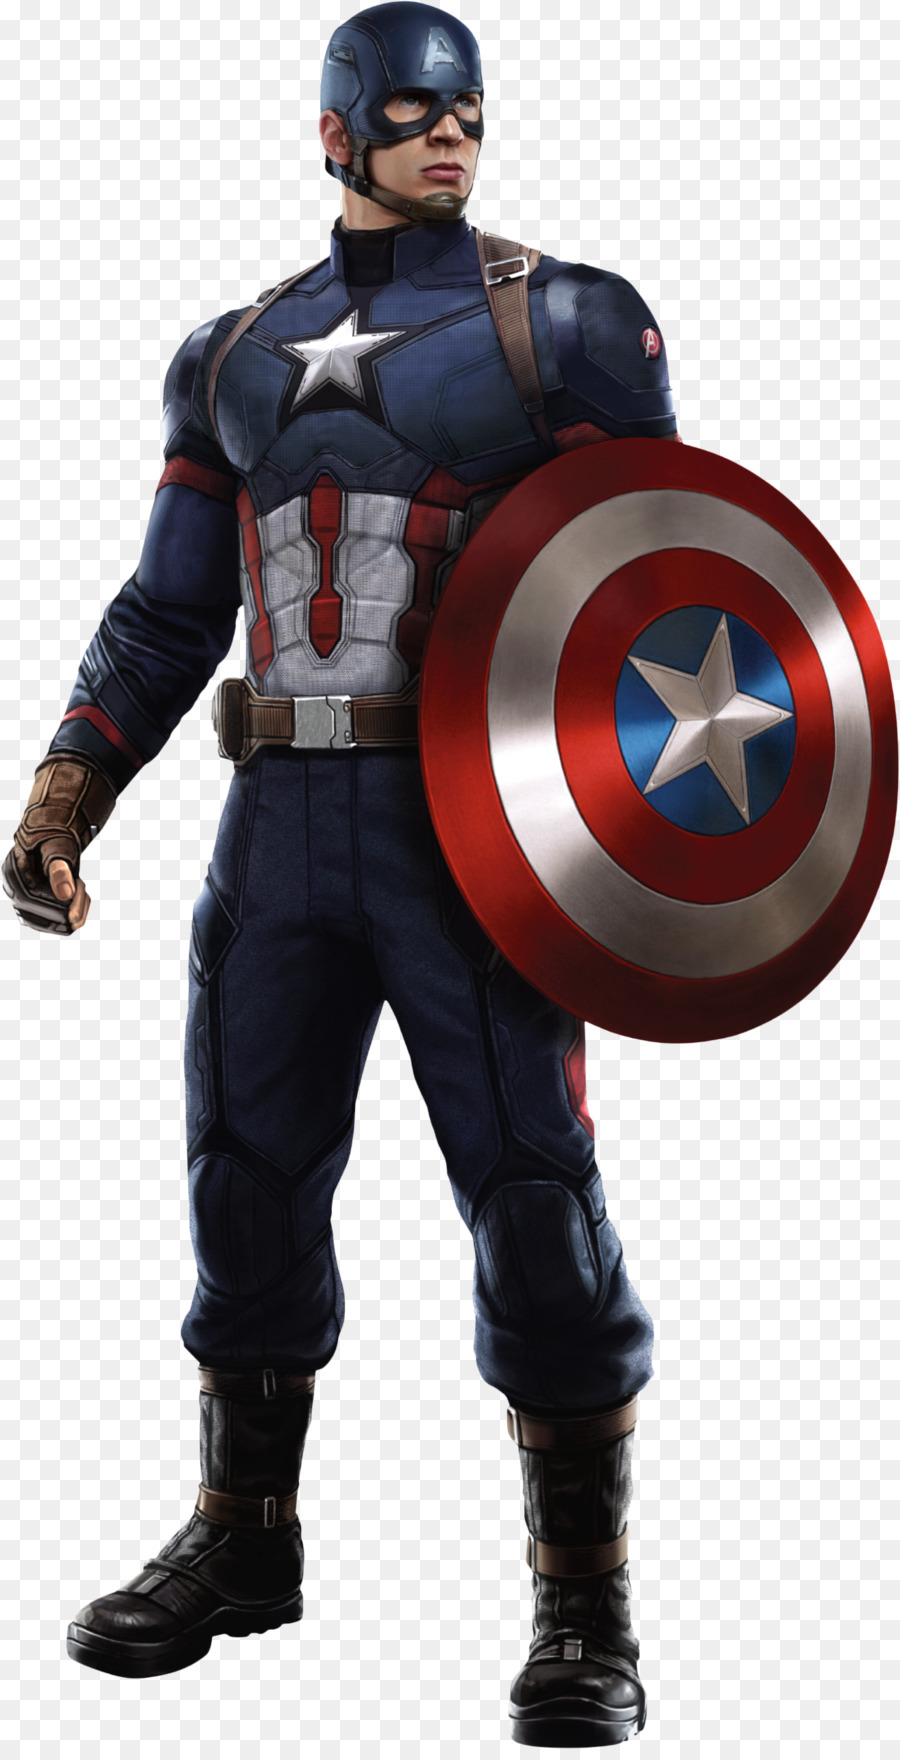 Captain America: Civil War Iron Man Clint Barton Chris Evans - Captain America png download - 1313*2551 - Free Transparent Captain America png Download.